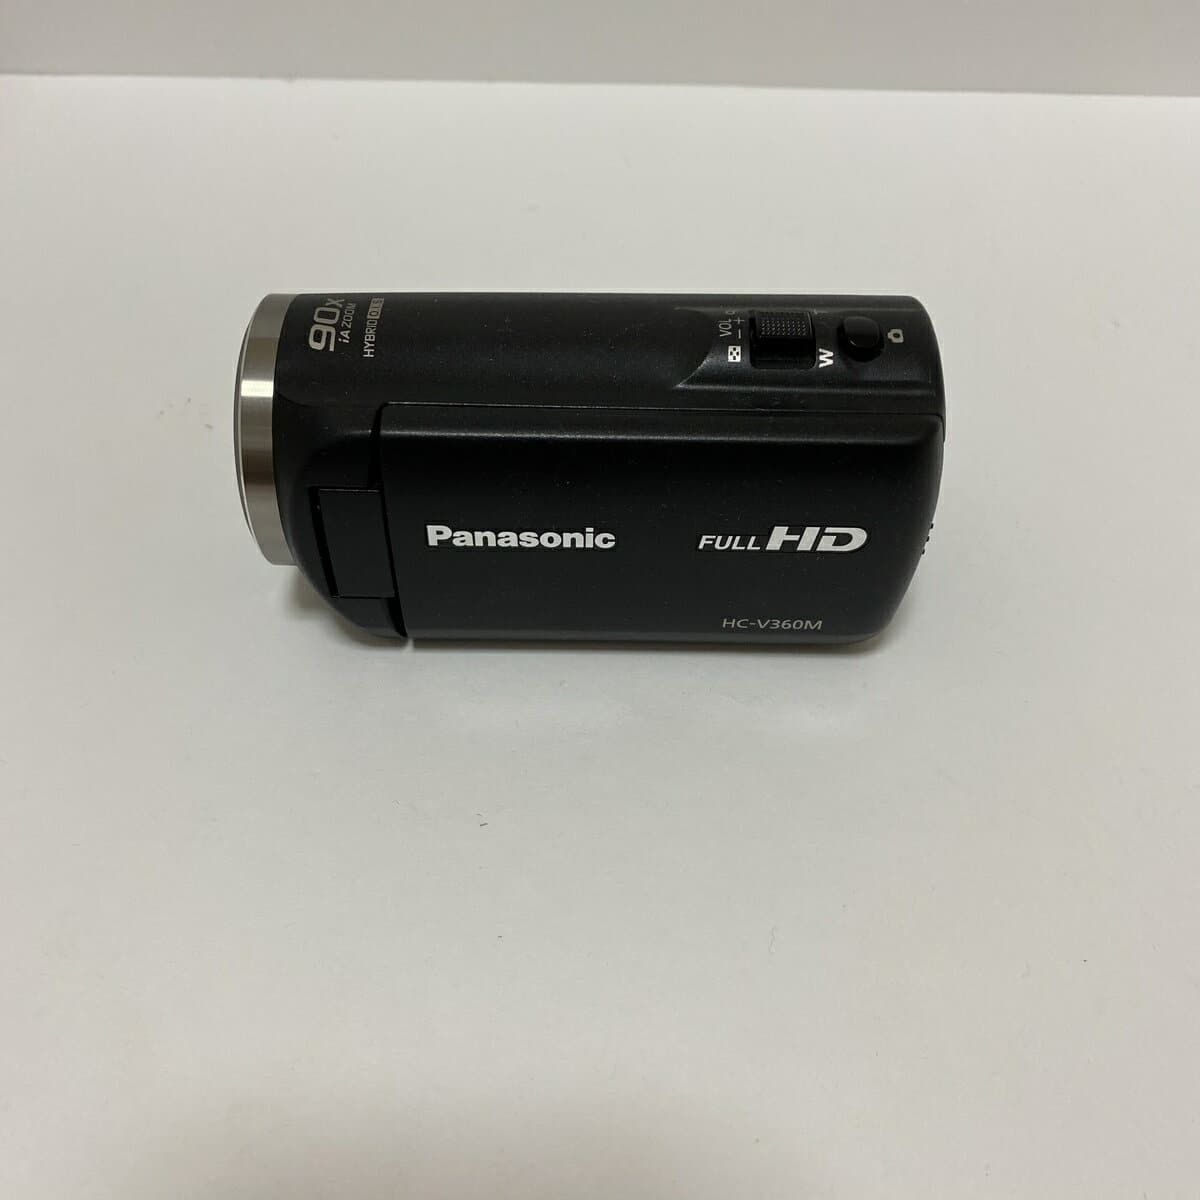 Used]Panasonic digital Hi-Vision video camera HC-V360M - BE FORWARD Store